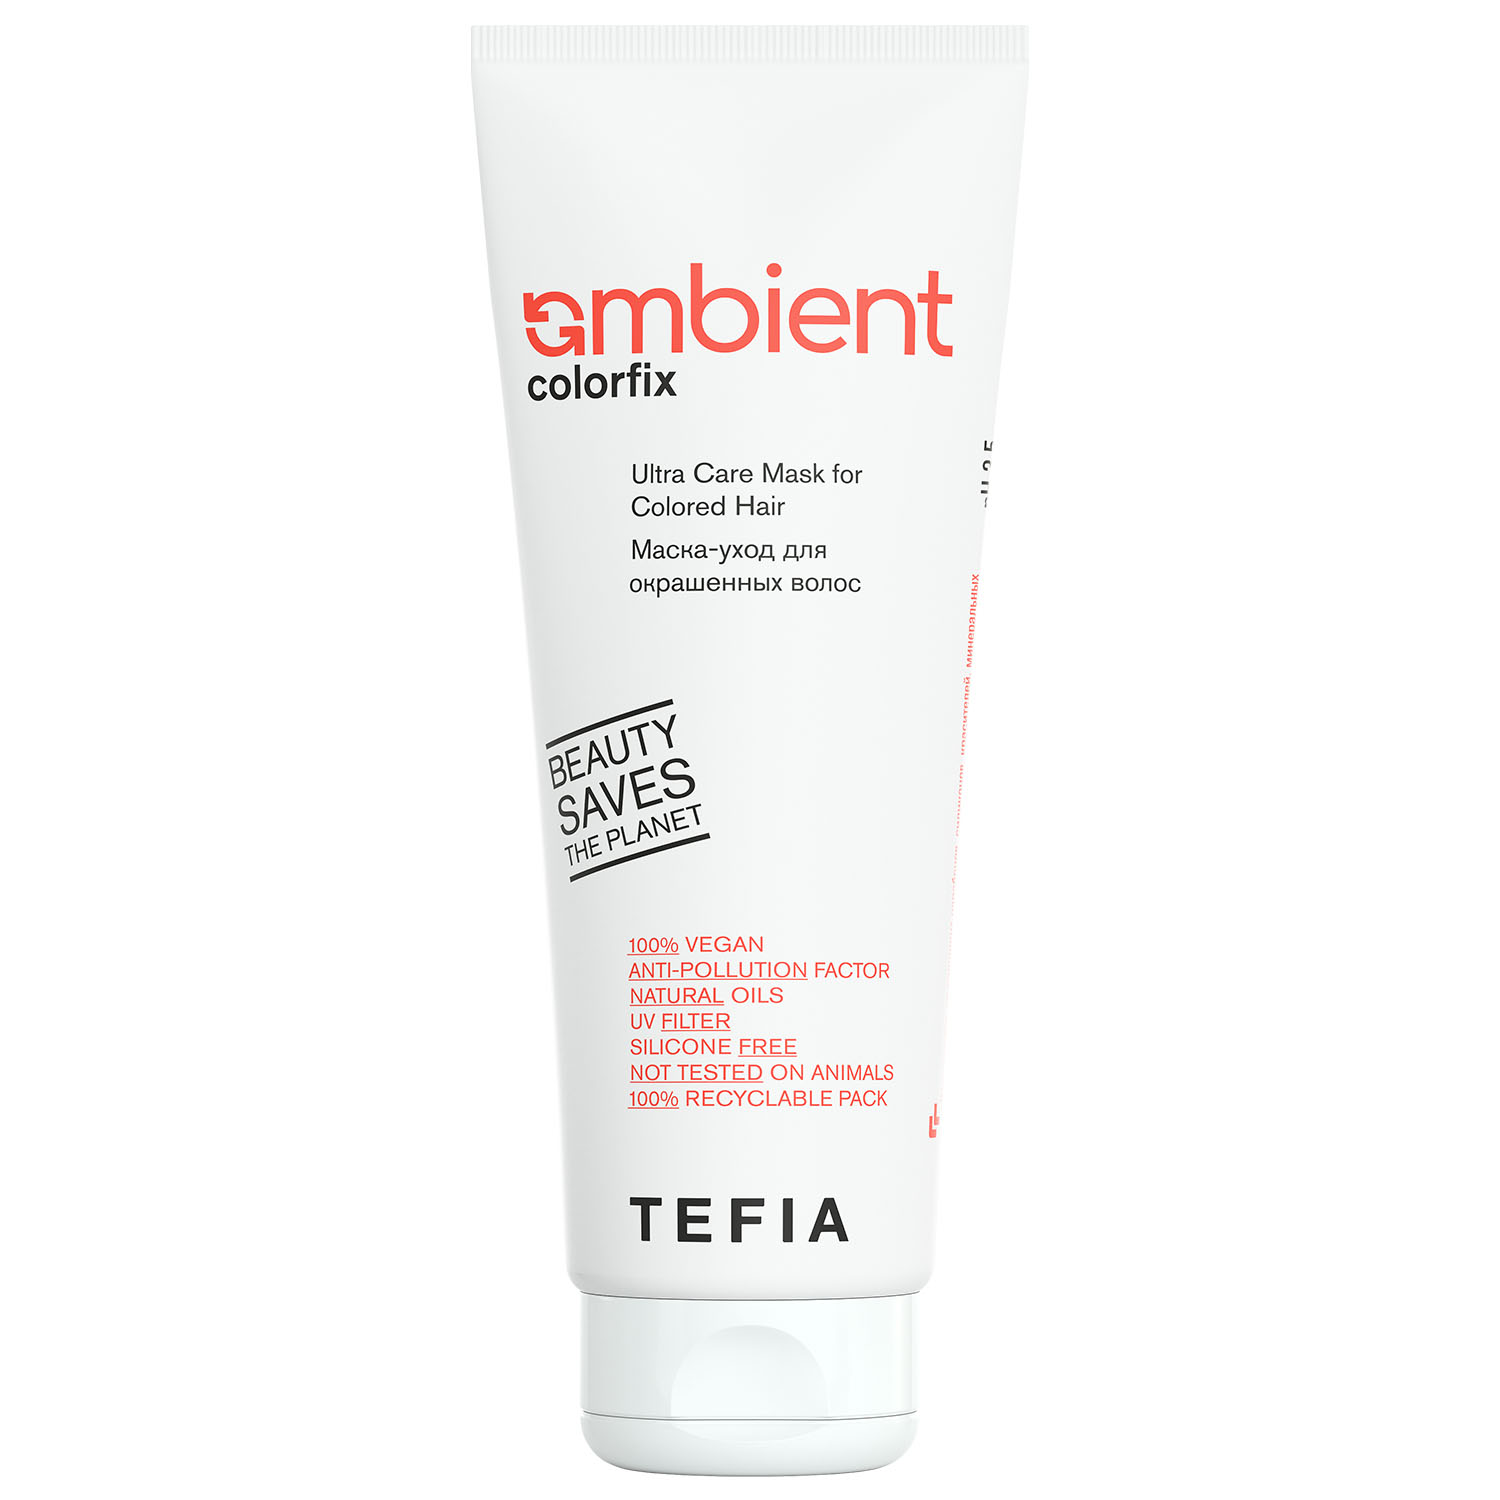 Купить Tefia Маска-уход для окрашенных волос Ultra Care Mask for Colored Hair, 250 мл (Tefia, Ambient)